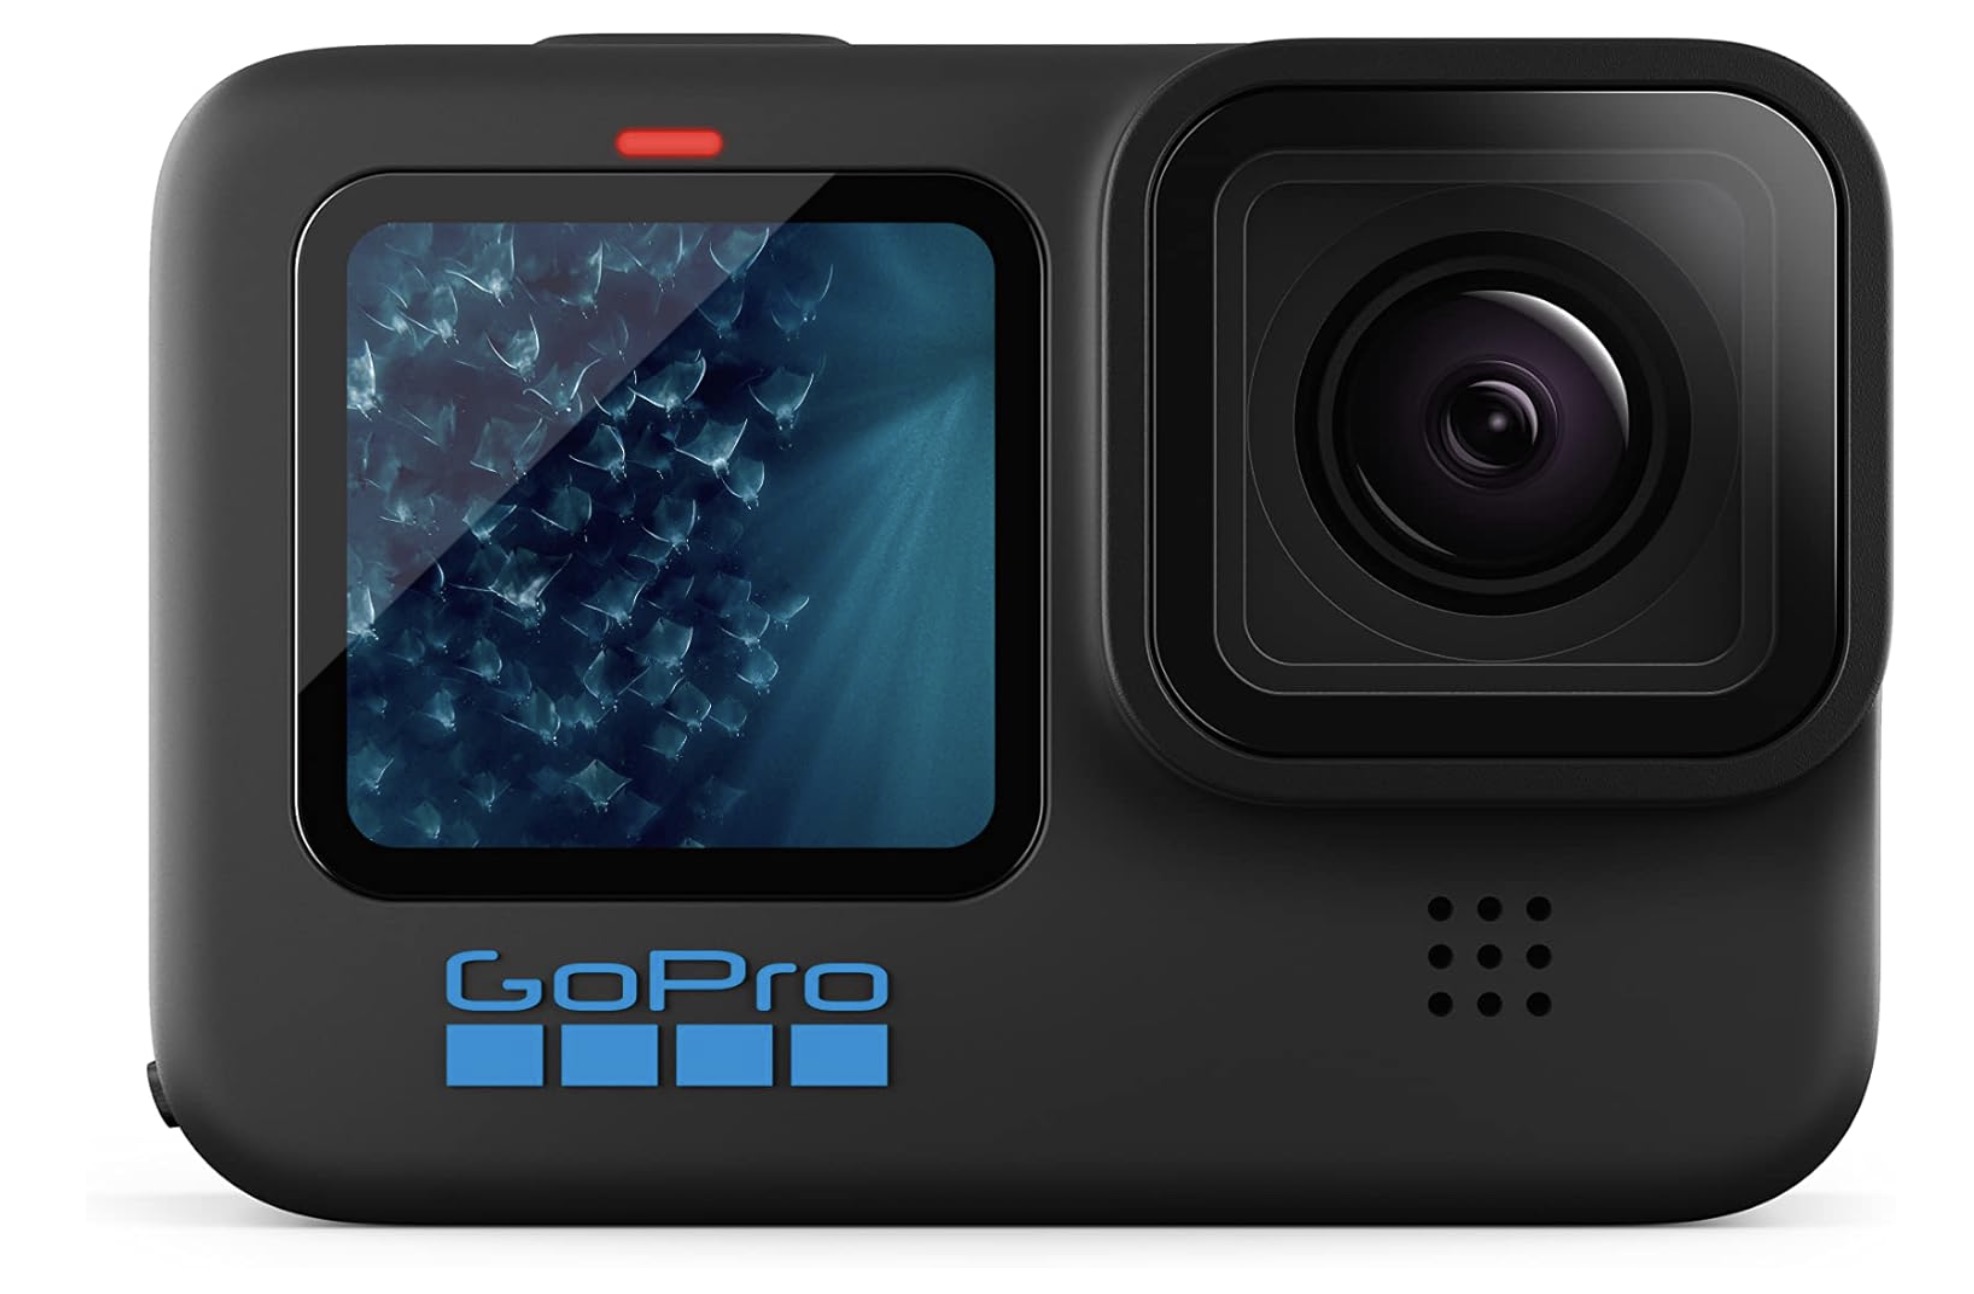 GoPro HERO11 Black